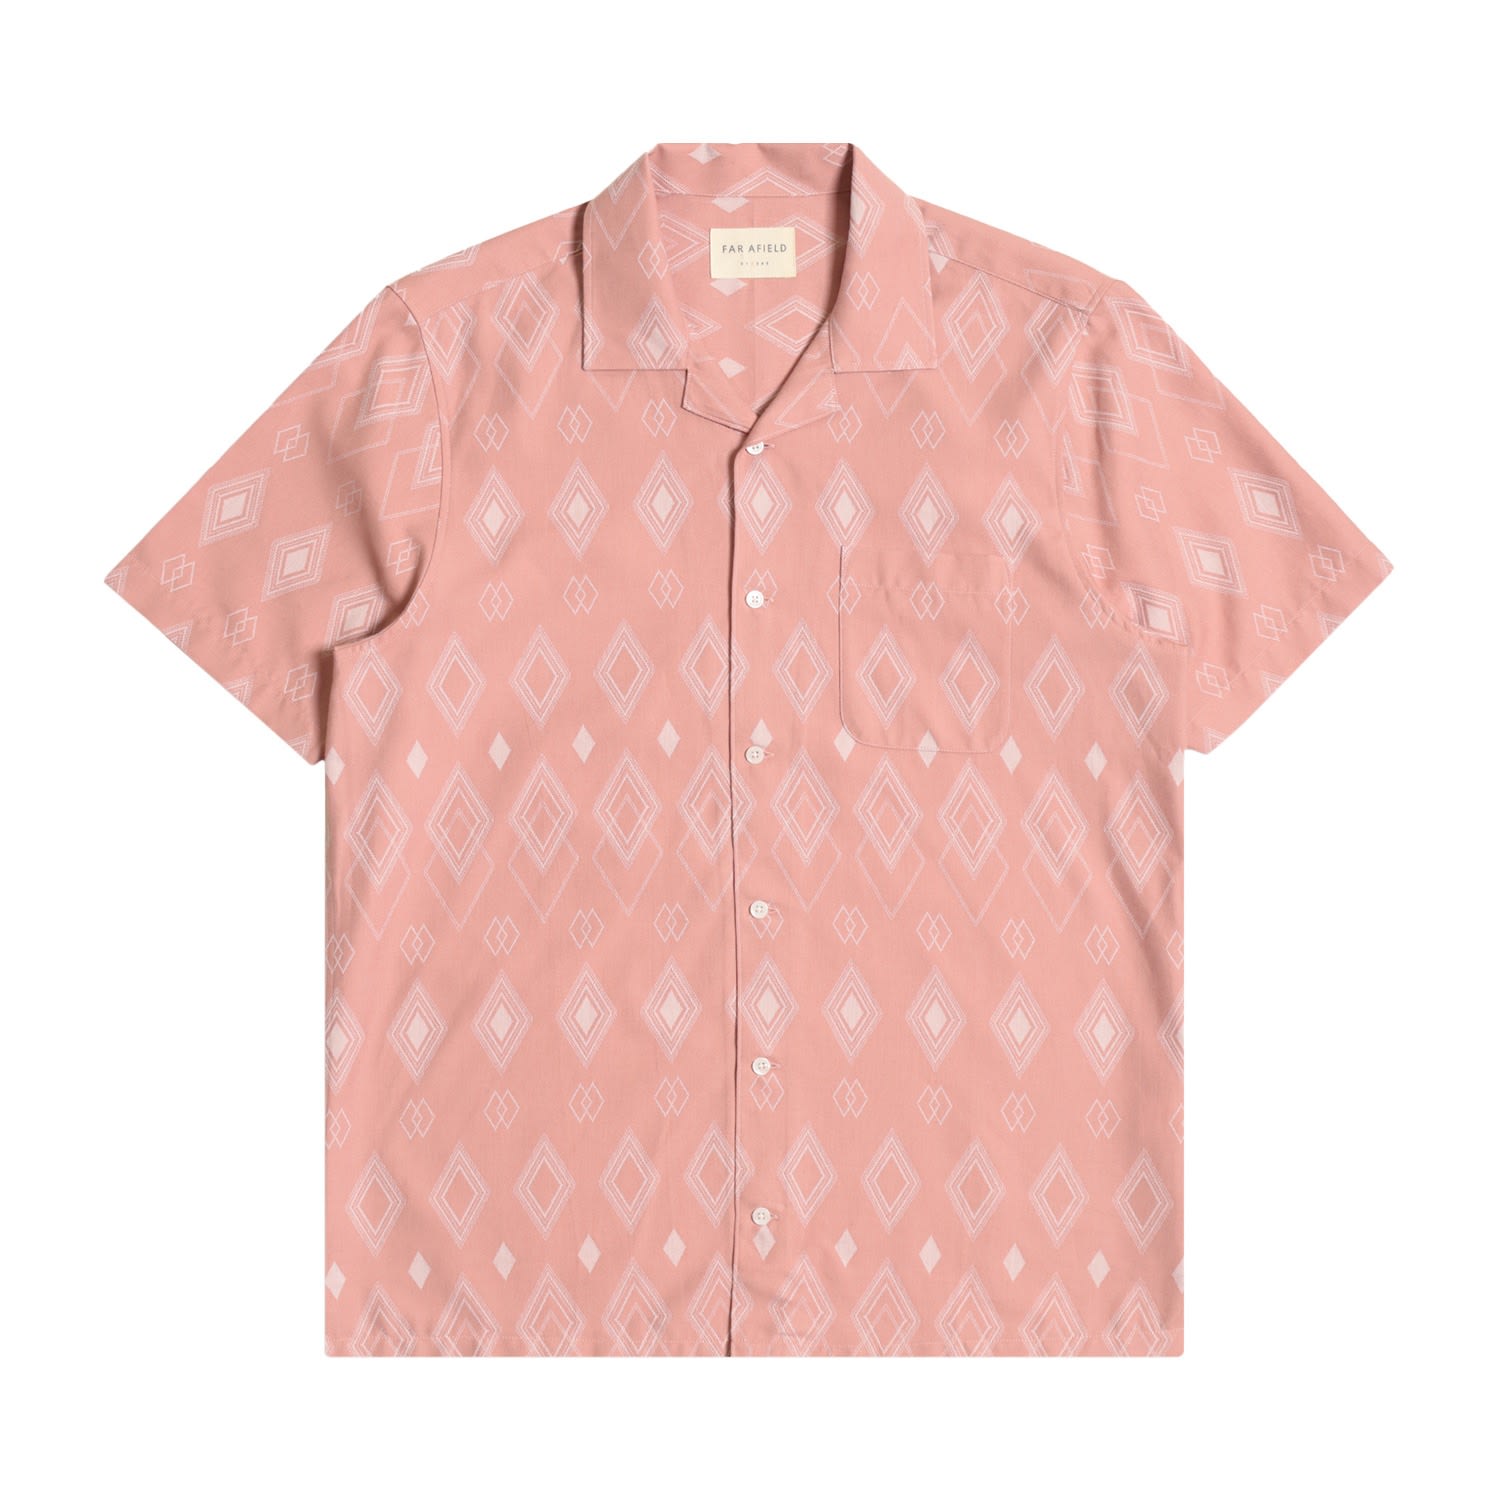 Men's Stachio Shirt - Diamonds Print Mahogany Pink Small Far Afield